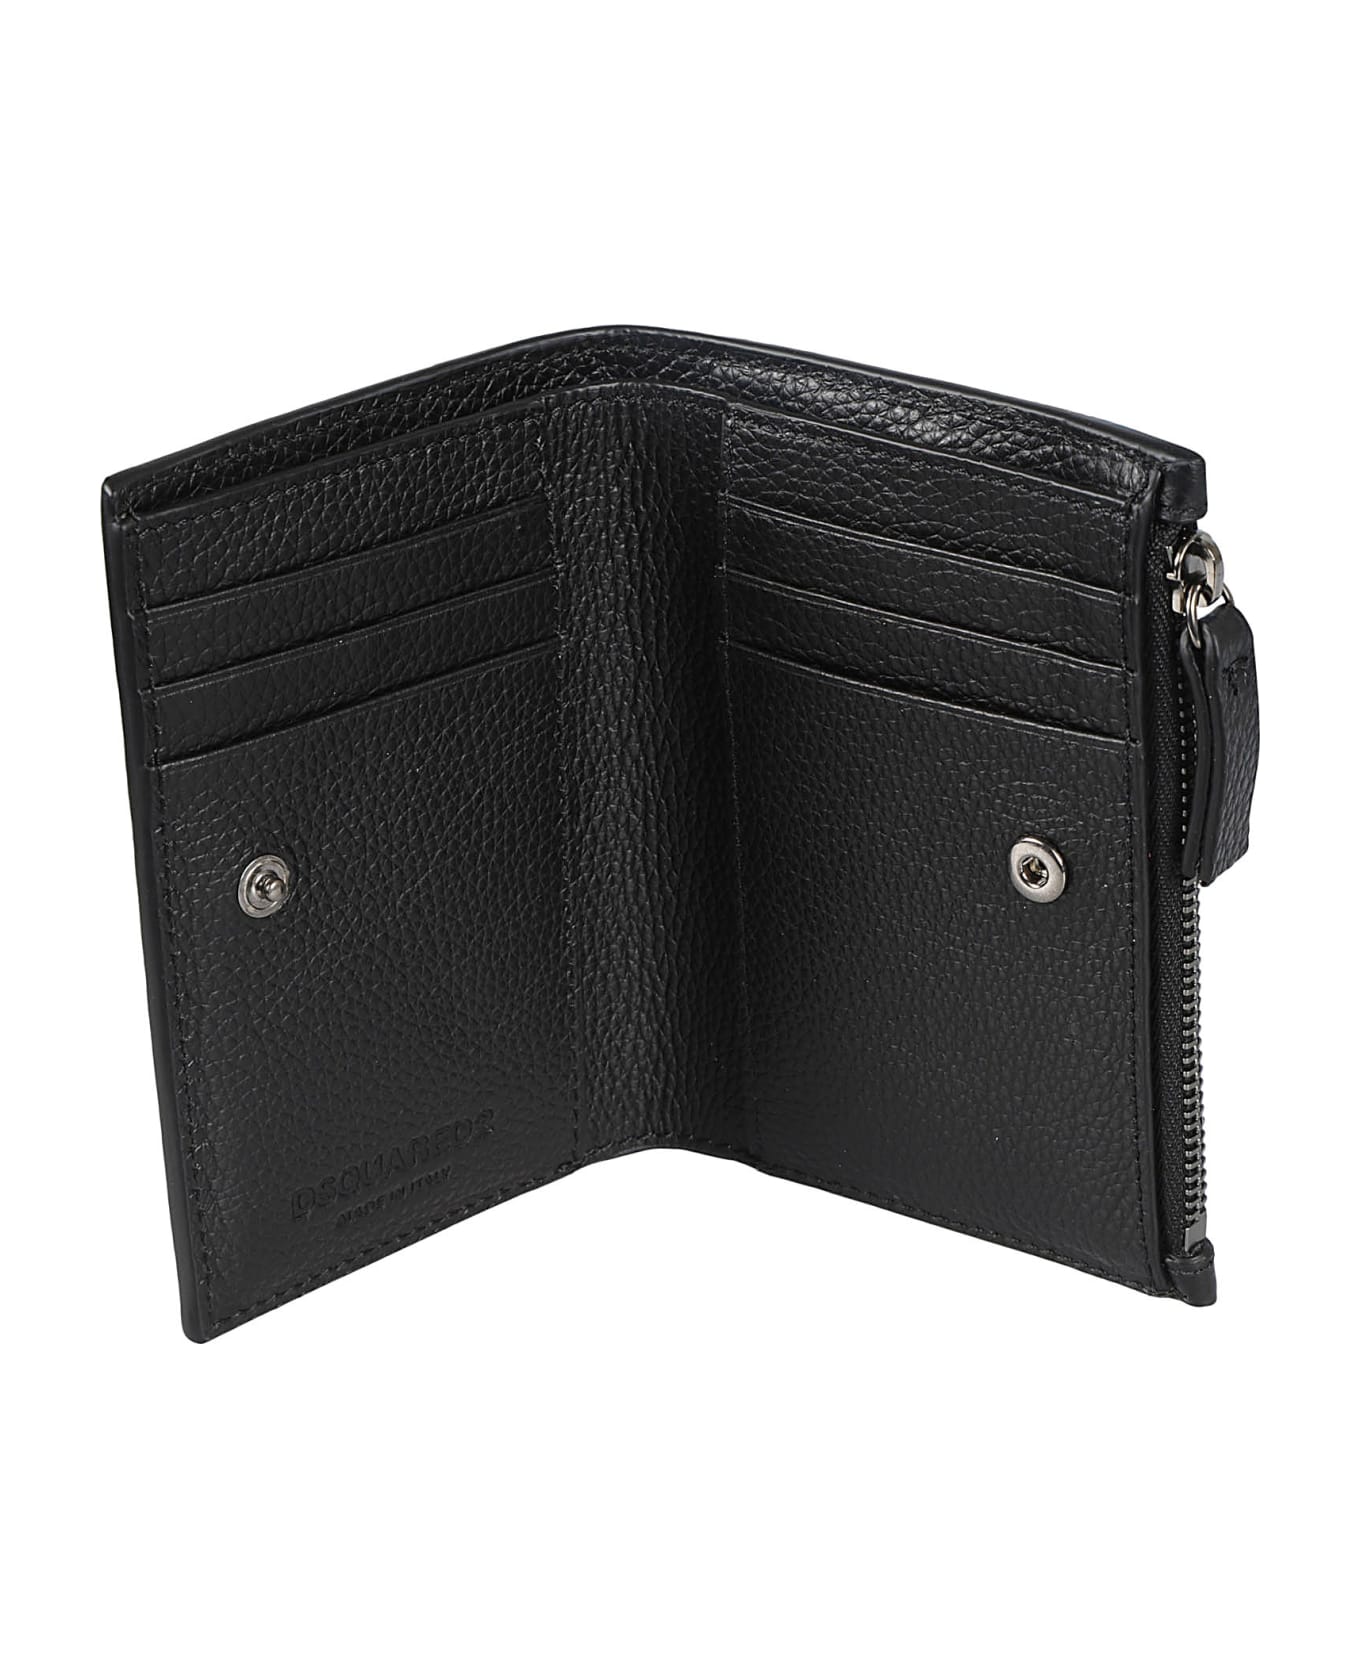 Dsquared2 Zip-buttoned Wallet - Black